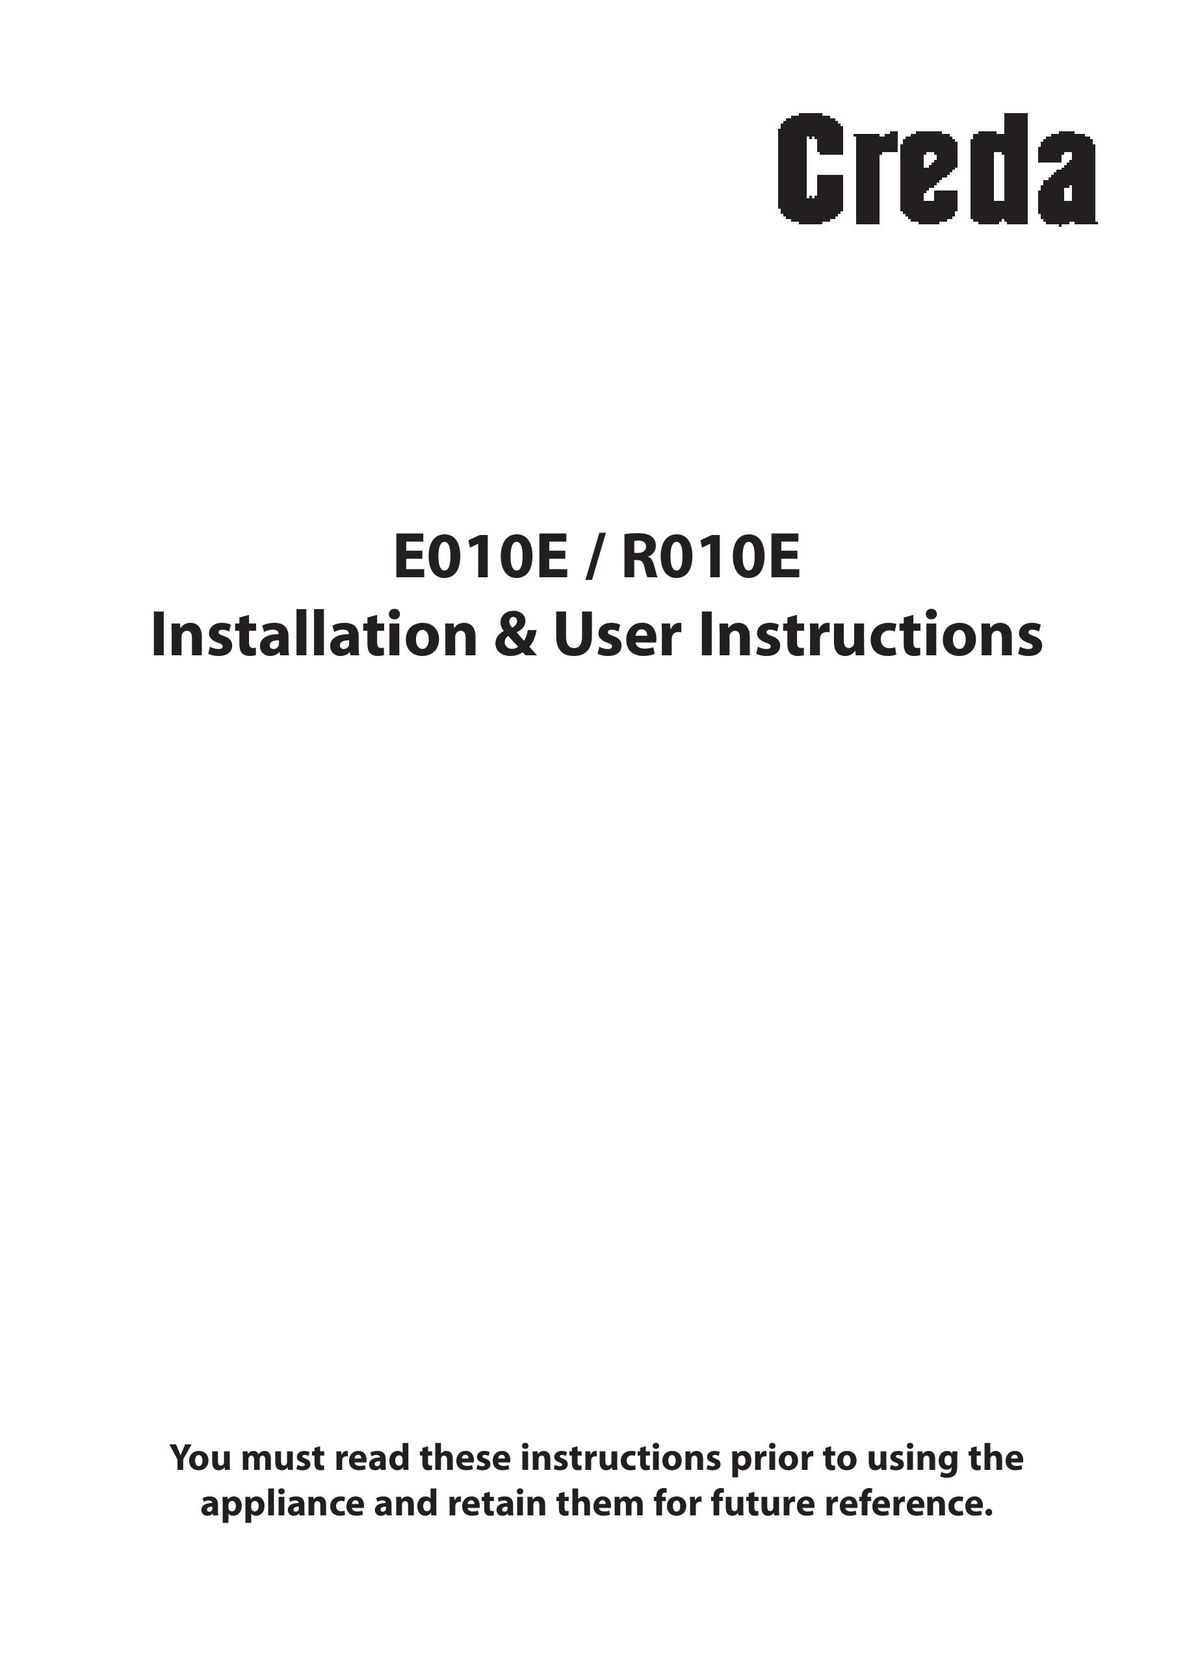 Creda E010E Oven User Manual